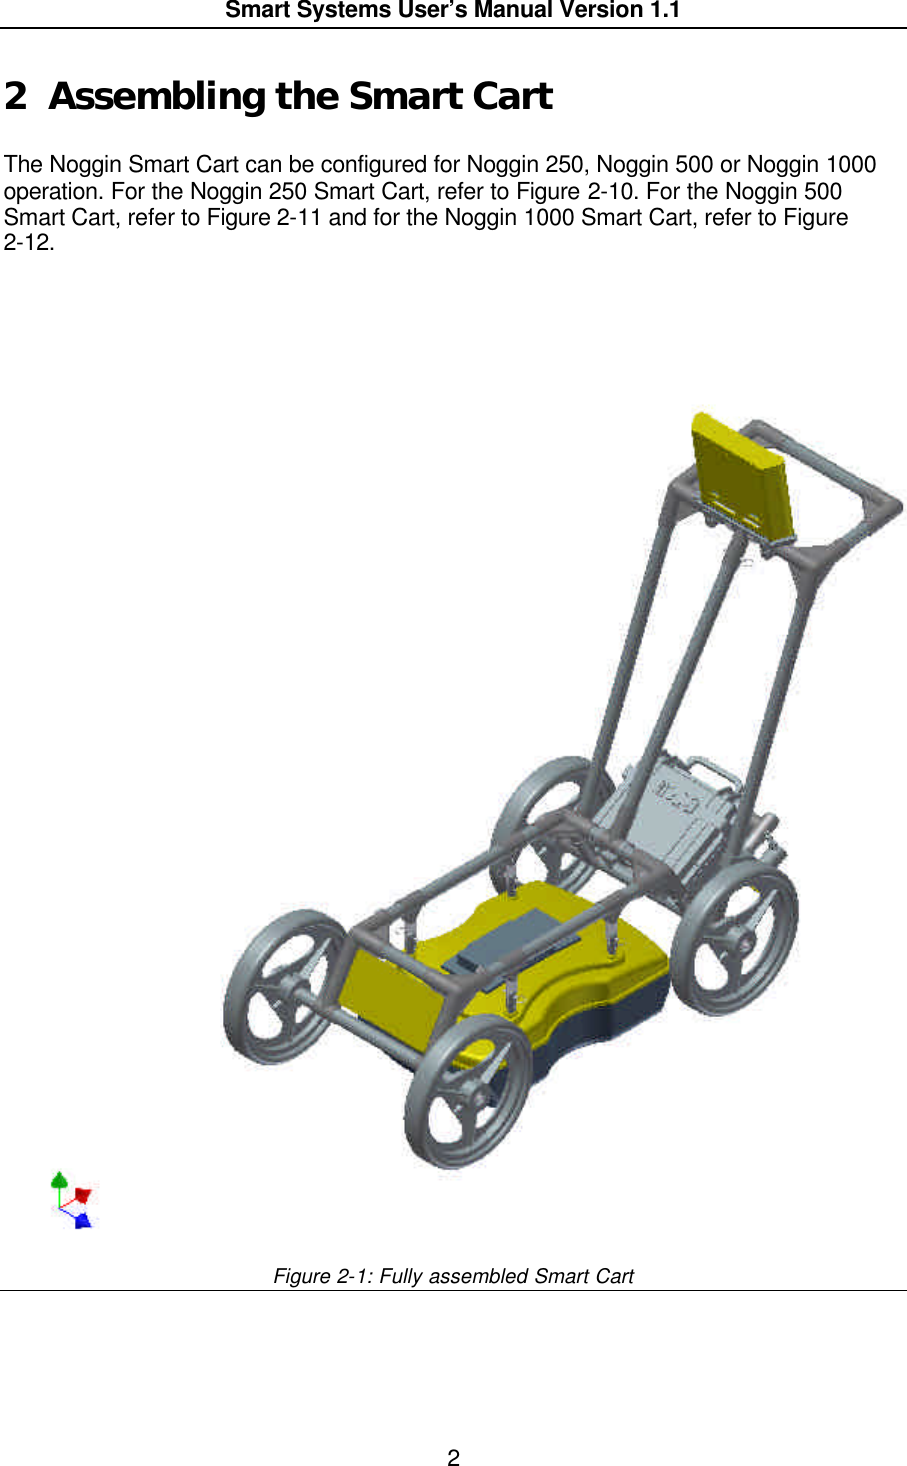  Smart Systems User’s Manual Version 1.1  2  2 Assembling the Smart Cart  The Noggin Smart Cart can be configured for Noggin 250, Noggin 500 or Noggin 1000 operation. For the Noggin 250 Smart Cart, refer to Figure 2-10. For the Noggin 500 Smart Cart, refer to Figure 2-11 and for the Noggin 1000 Smart Cart, refer to Figure 2-12.  Figure 2-1: Fully assembled Smart Cart  